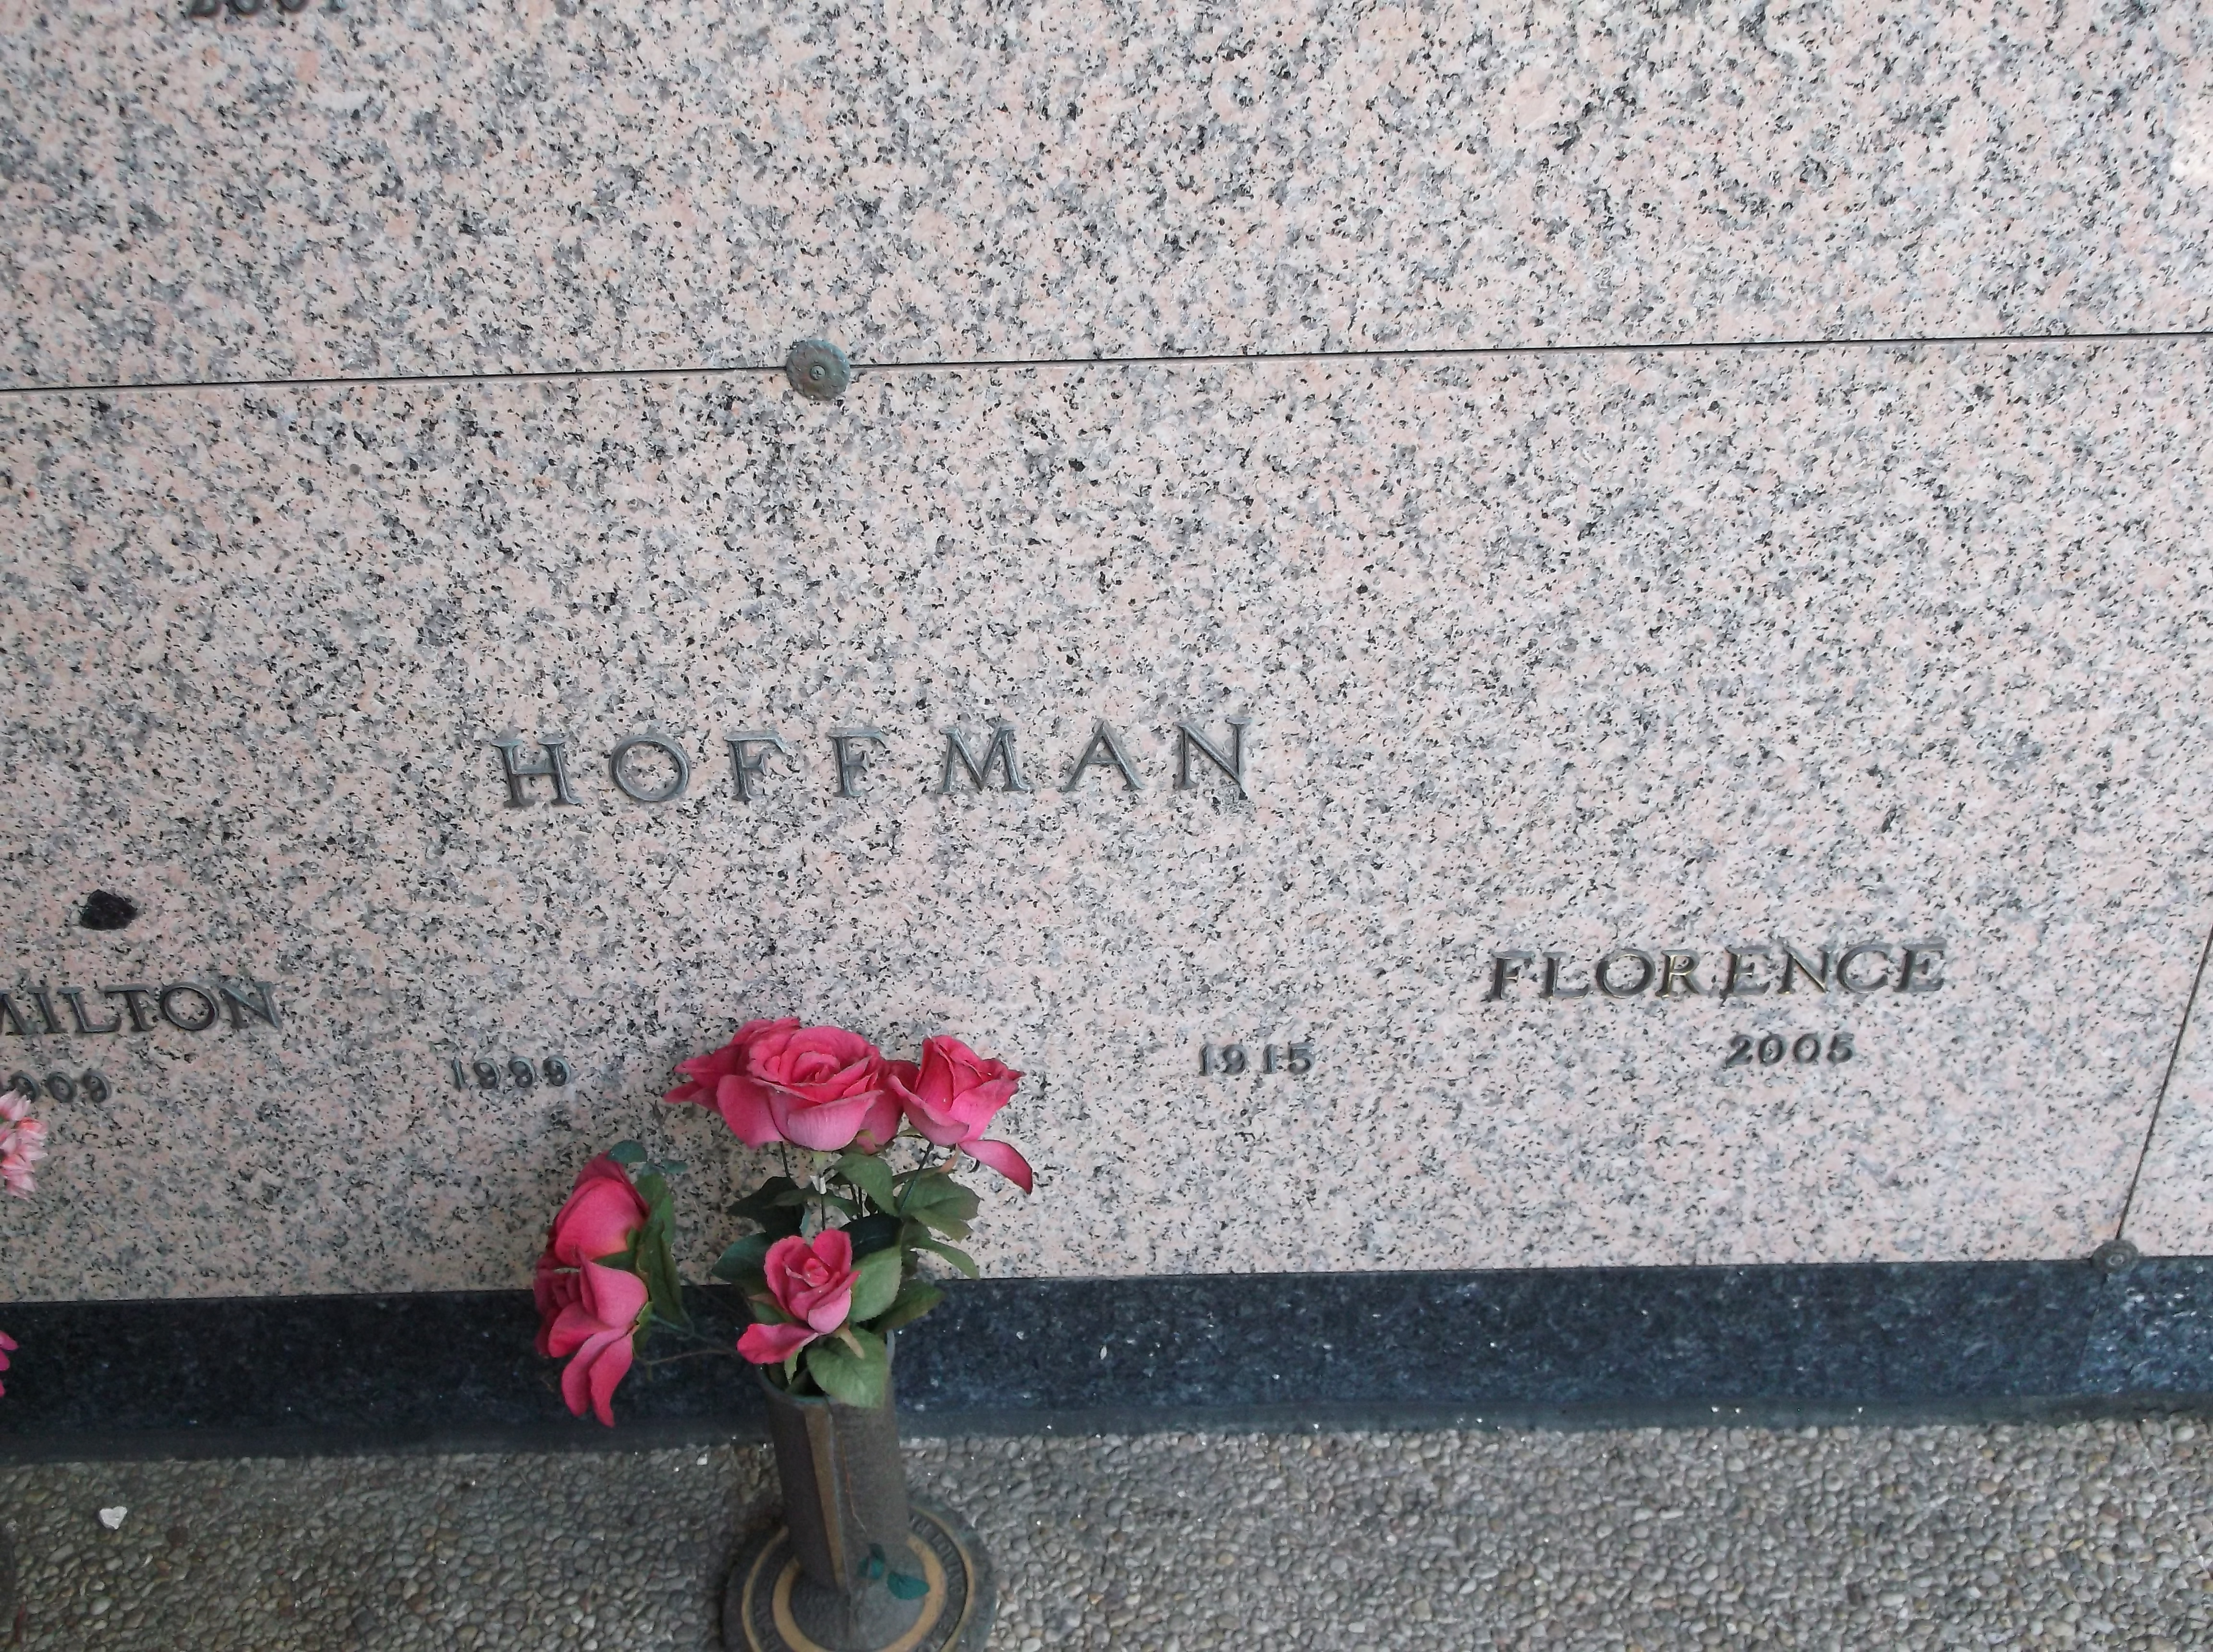 Florence Hoffman